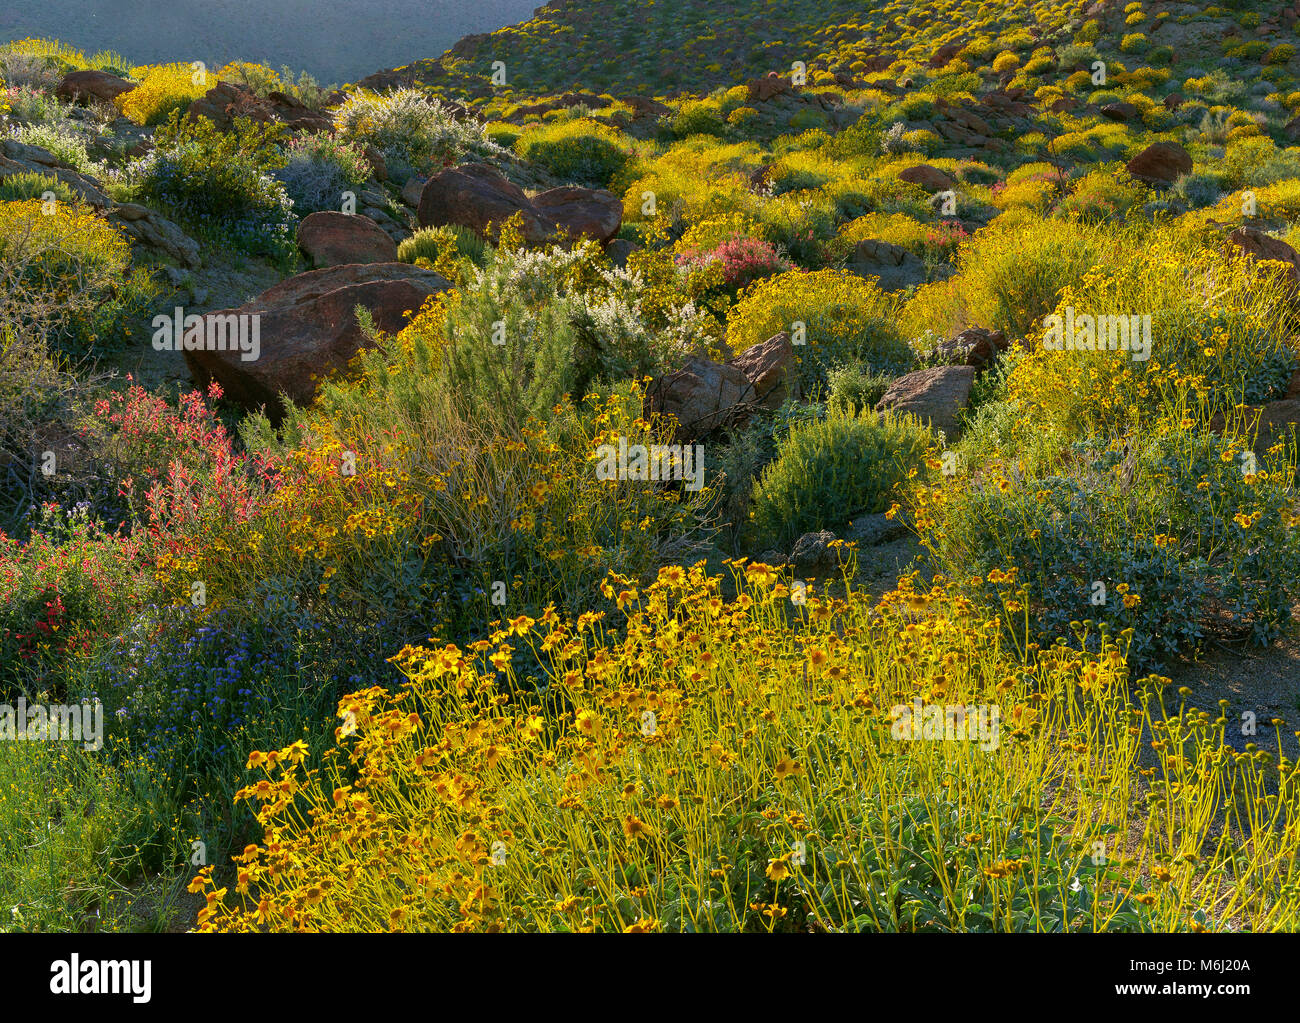 Brittlebush, Glorietta Canyon, Anza-Borrego Desert State Park, California Stock Photo